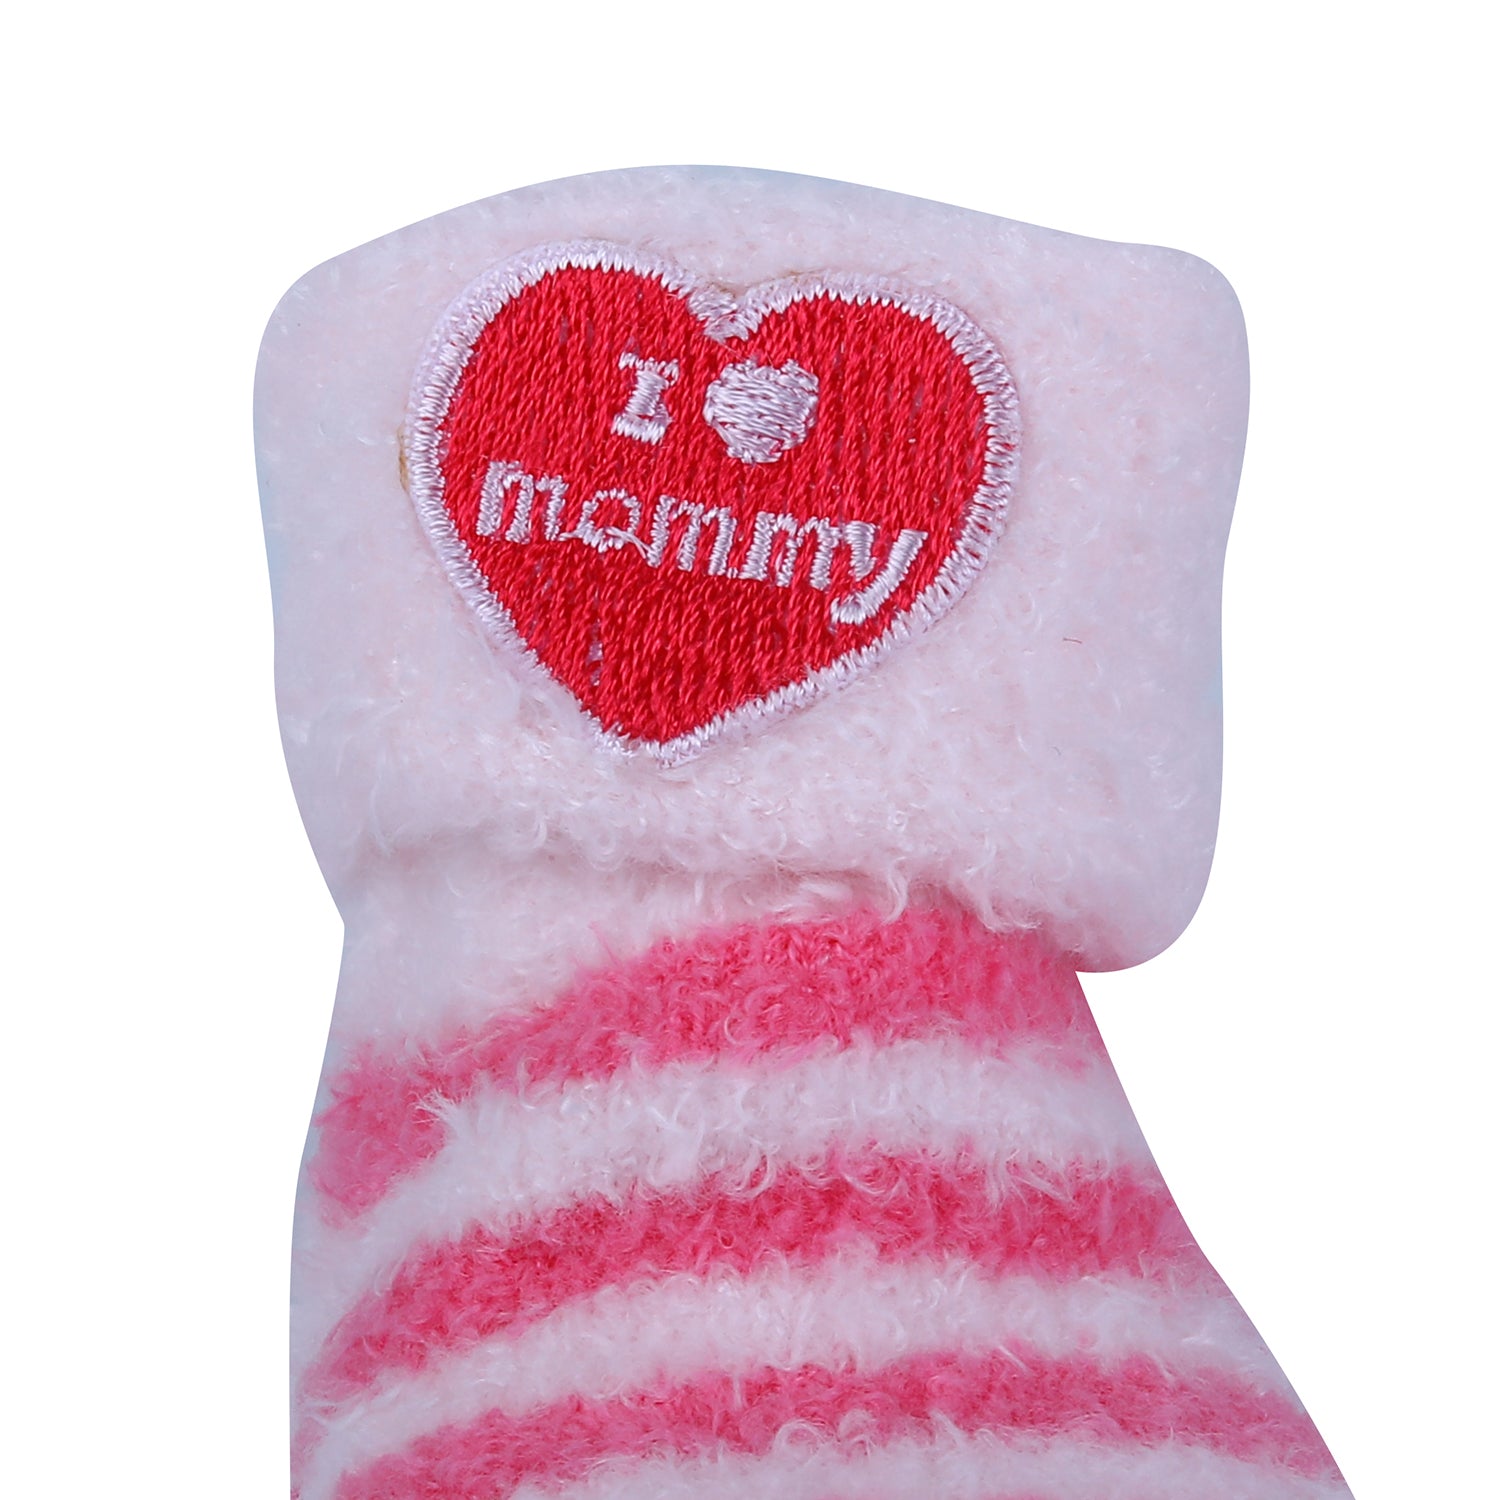 Baby Moo I Love Mummy Newborn Breathable Infant Cotton Socks - Pink - Baby Moo